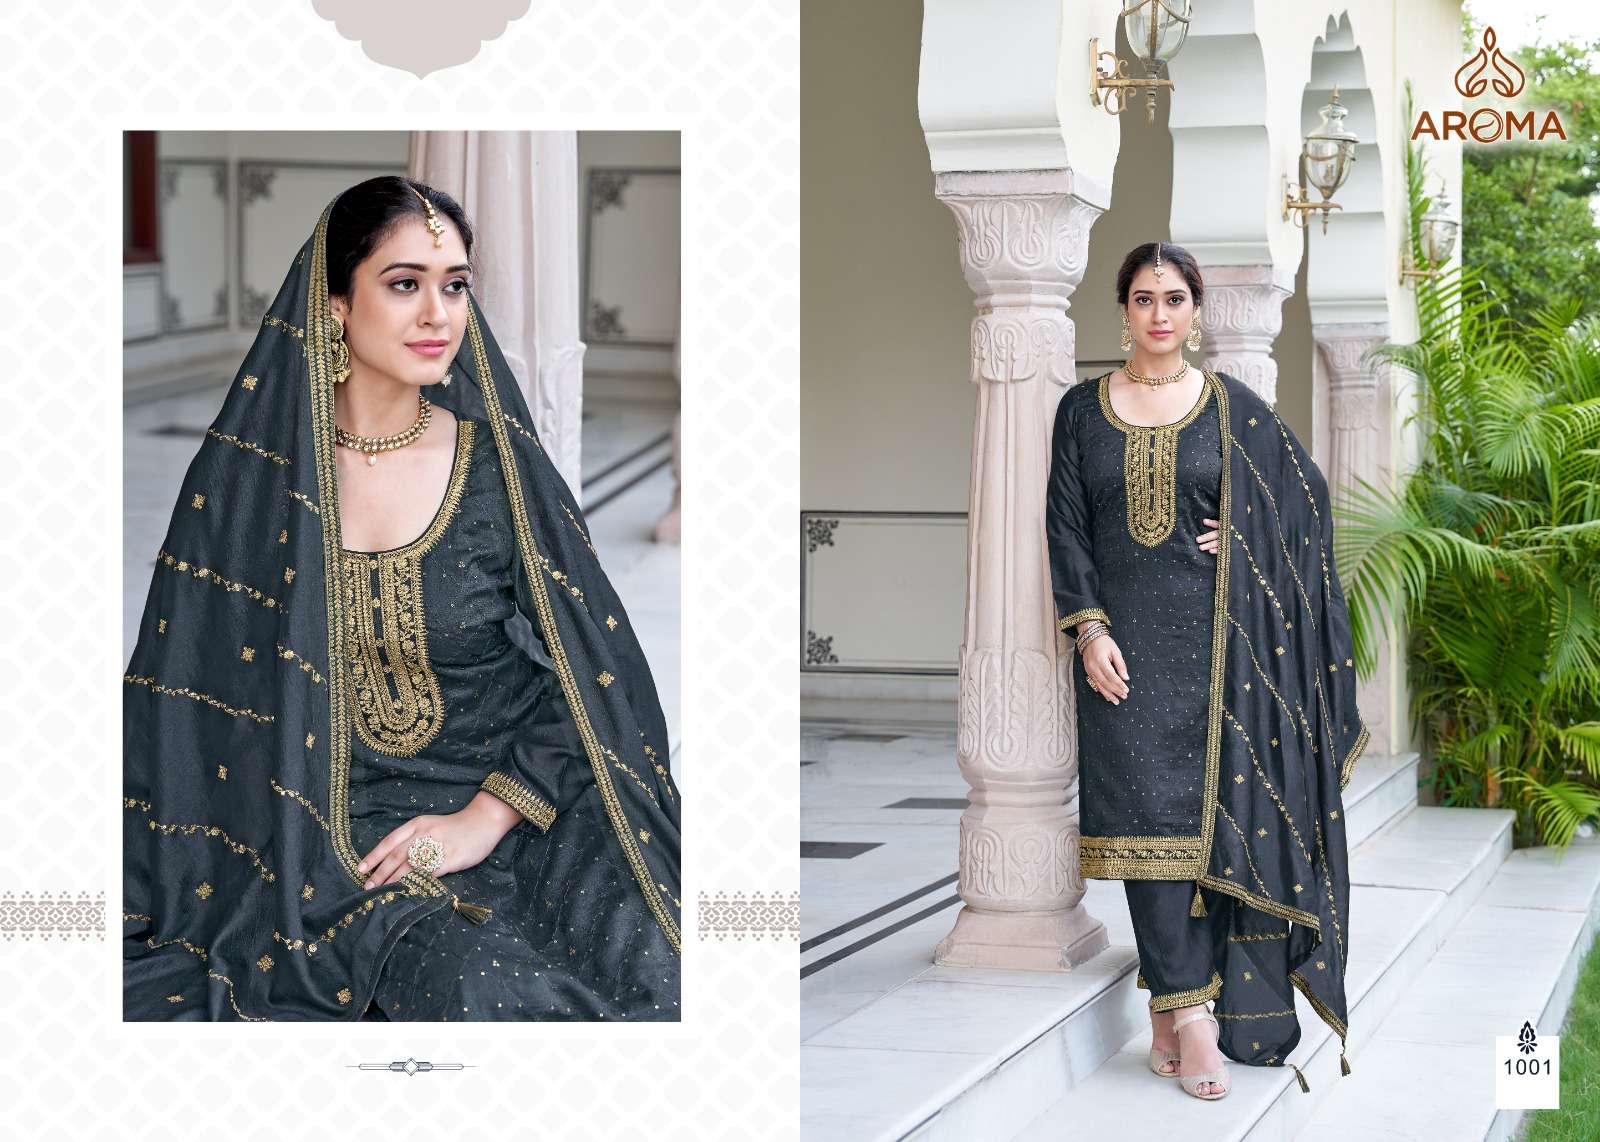 aroma nazara 1001-1004 series designer wedding wear salwar kameez wholesaler surat gujarat